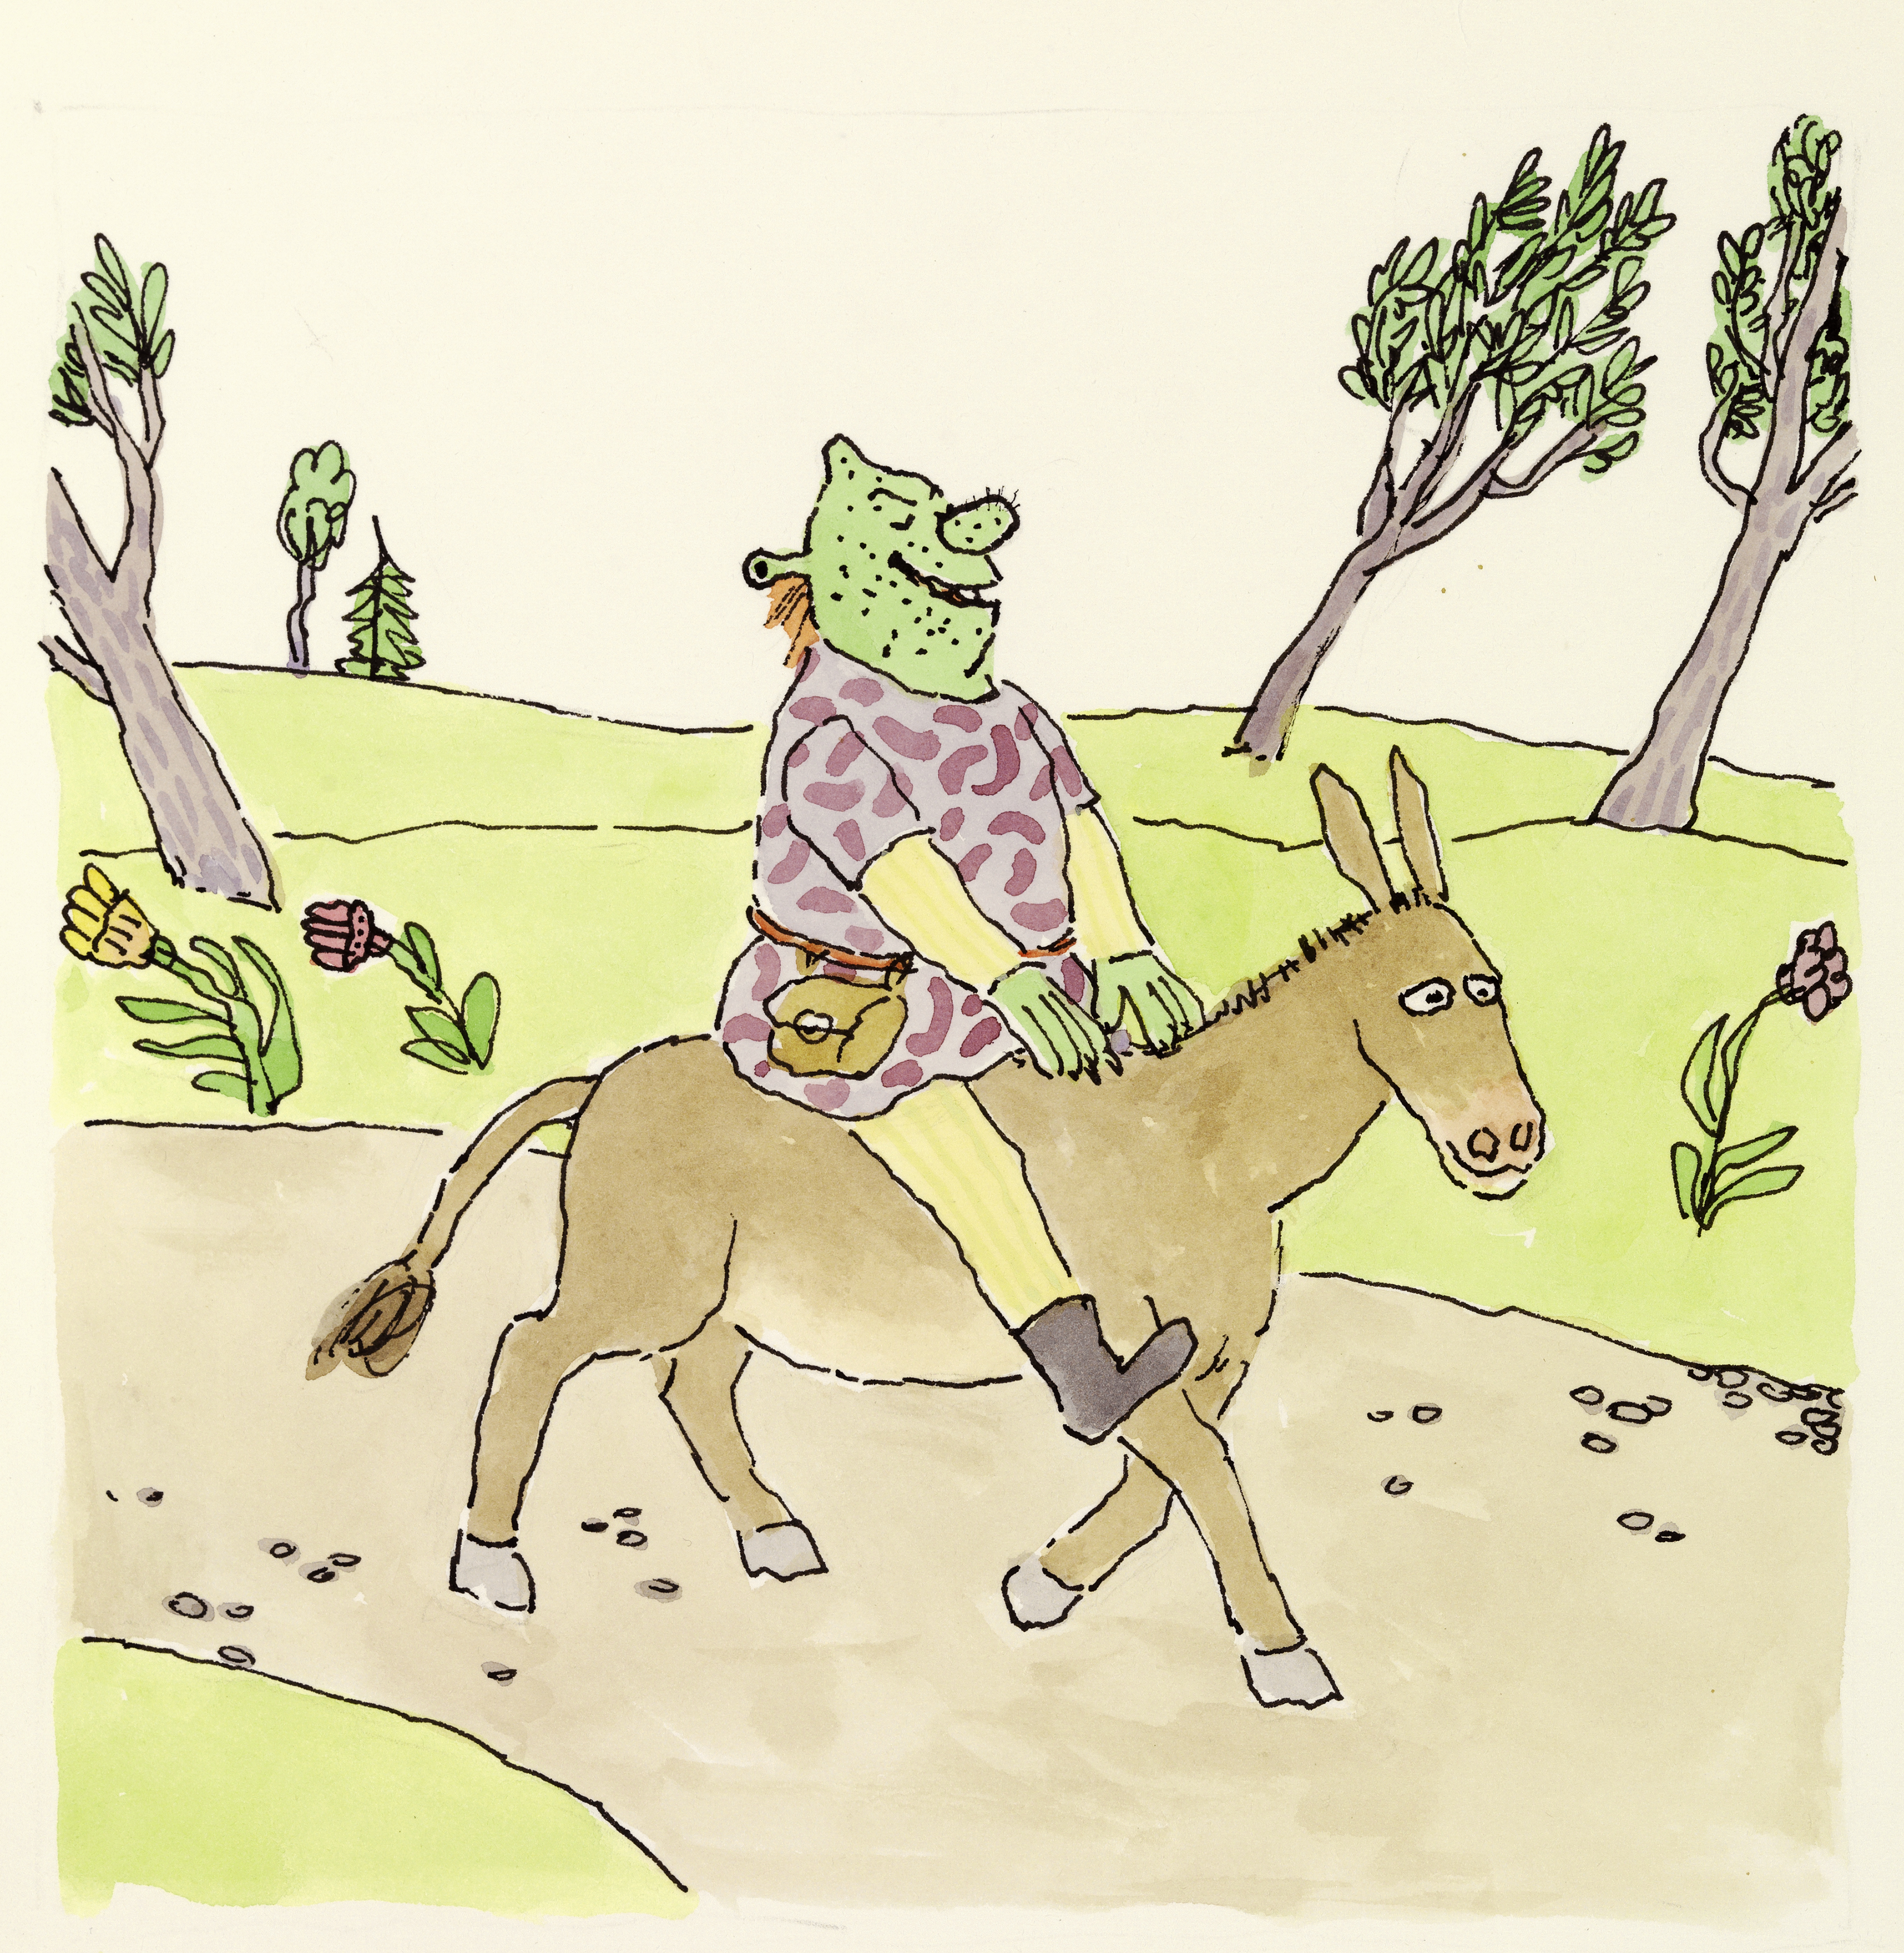 Illustration of Shrek riding donkey down rural road. 